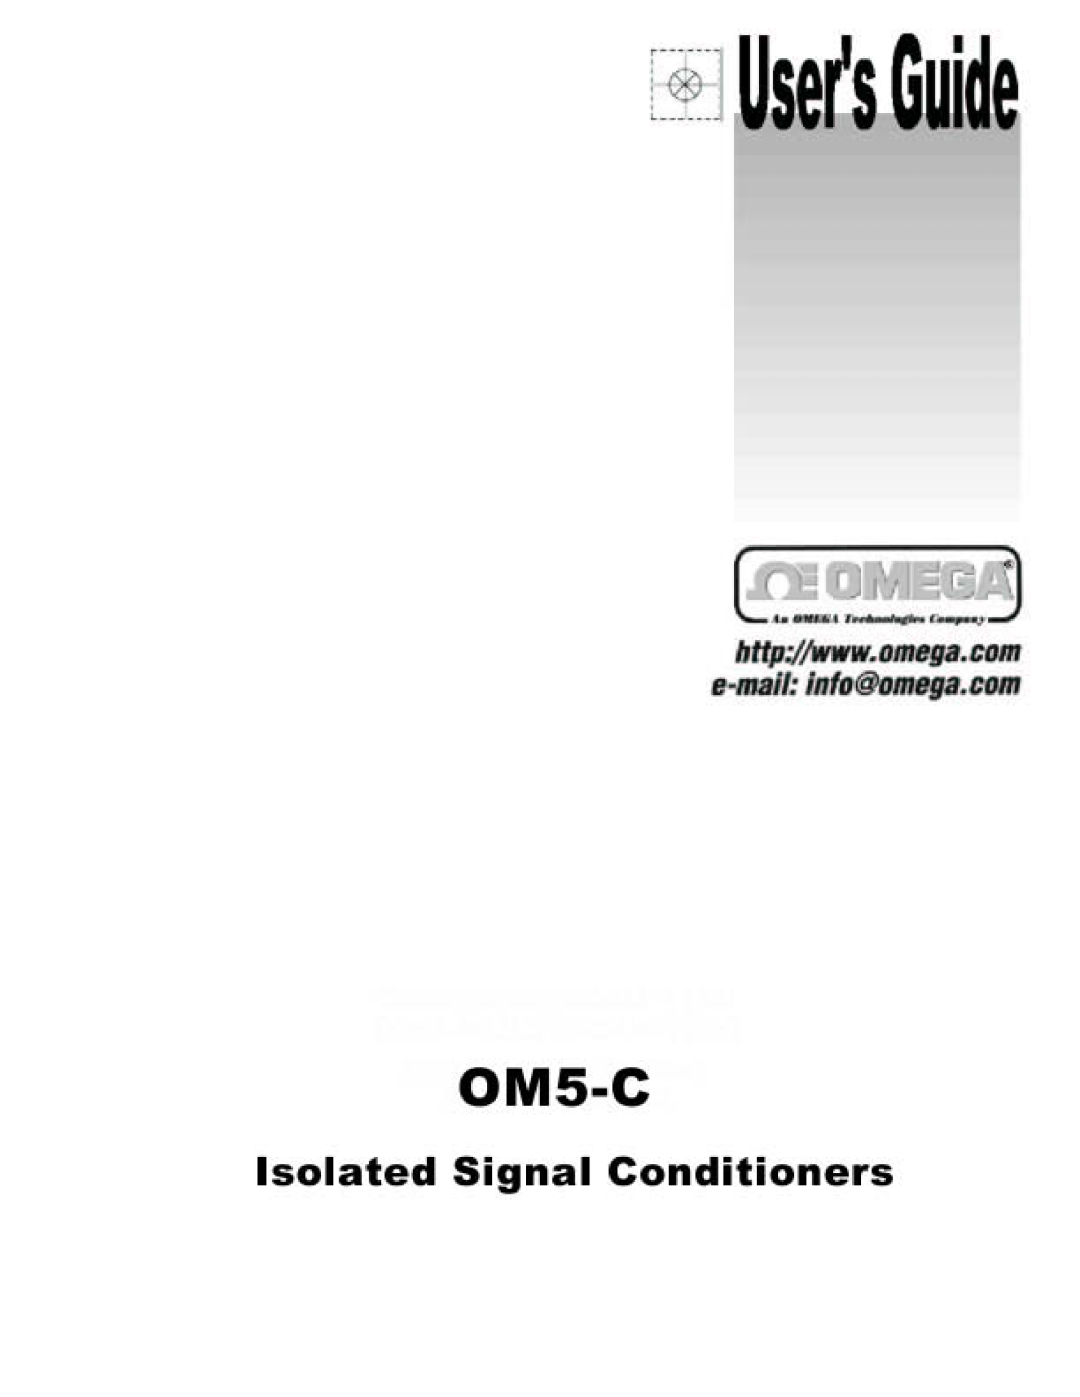 Omega Vehicle Security OM5-C manual 